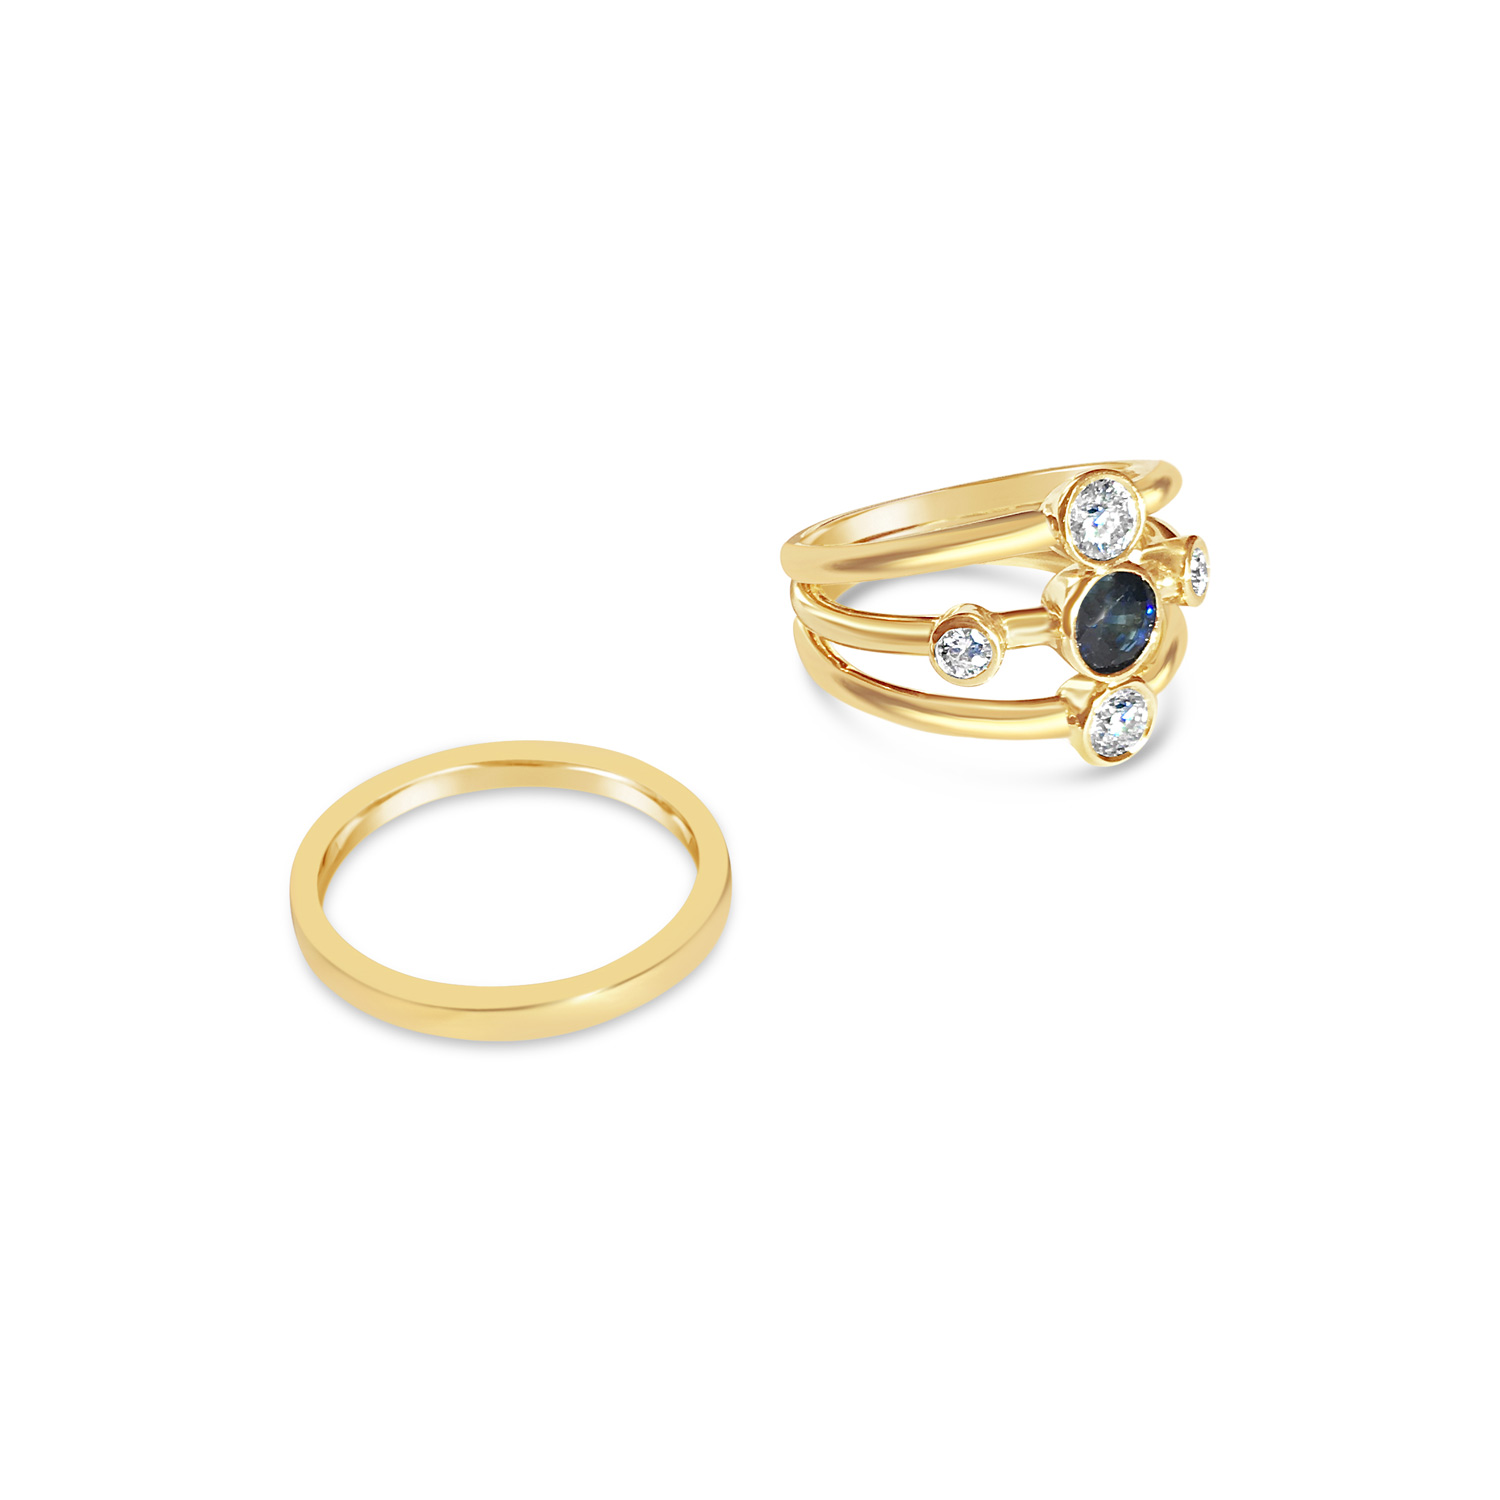 Bespoke sapphire and diamond rub over set five stone ring and wedding band